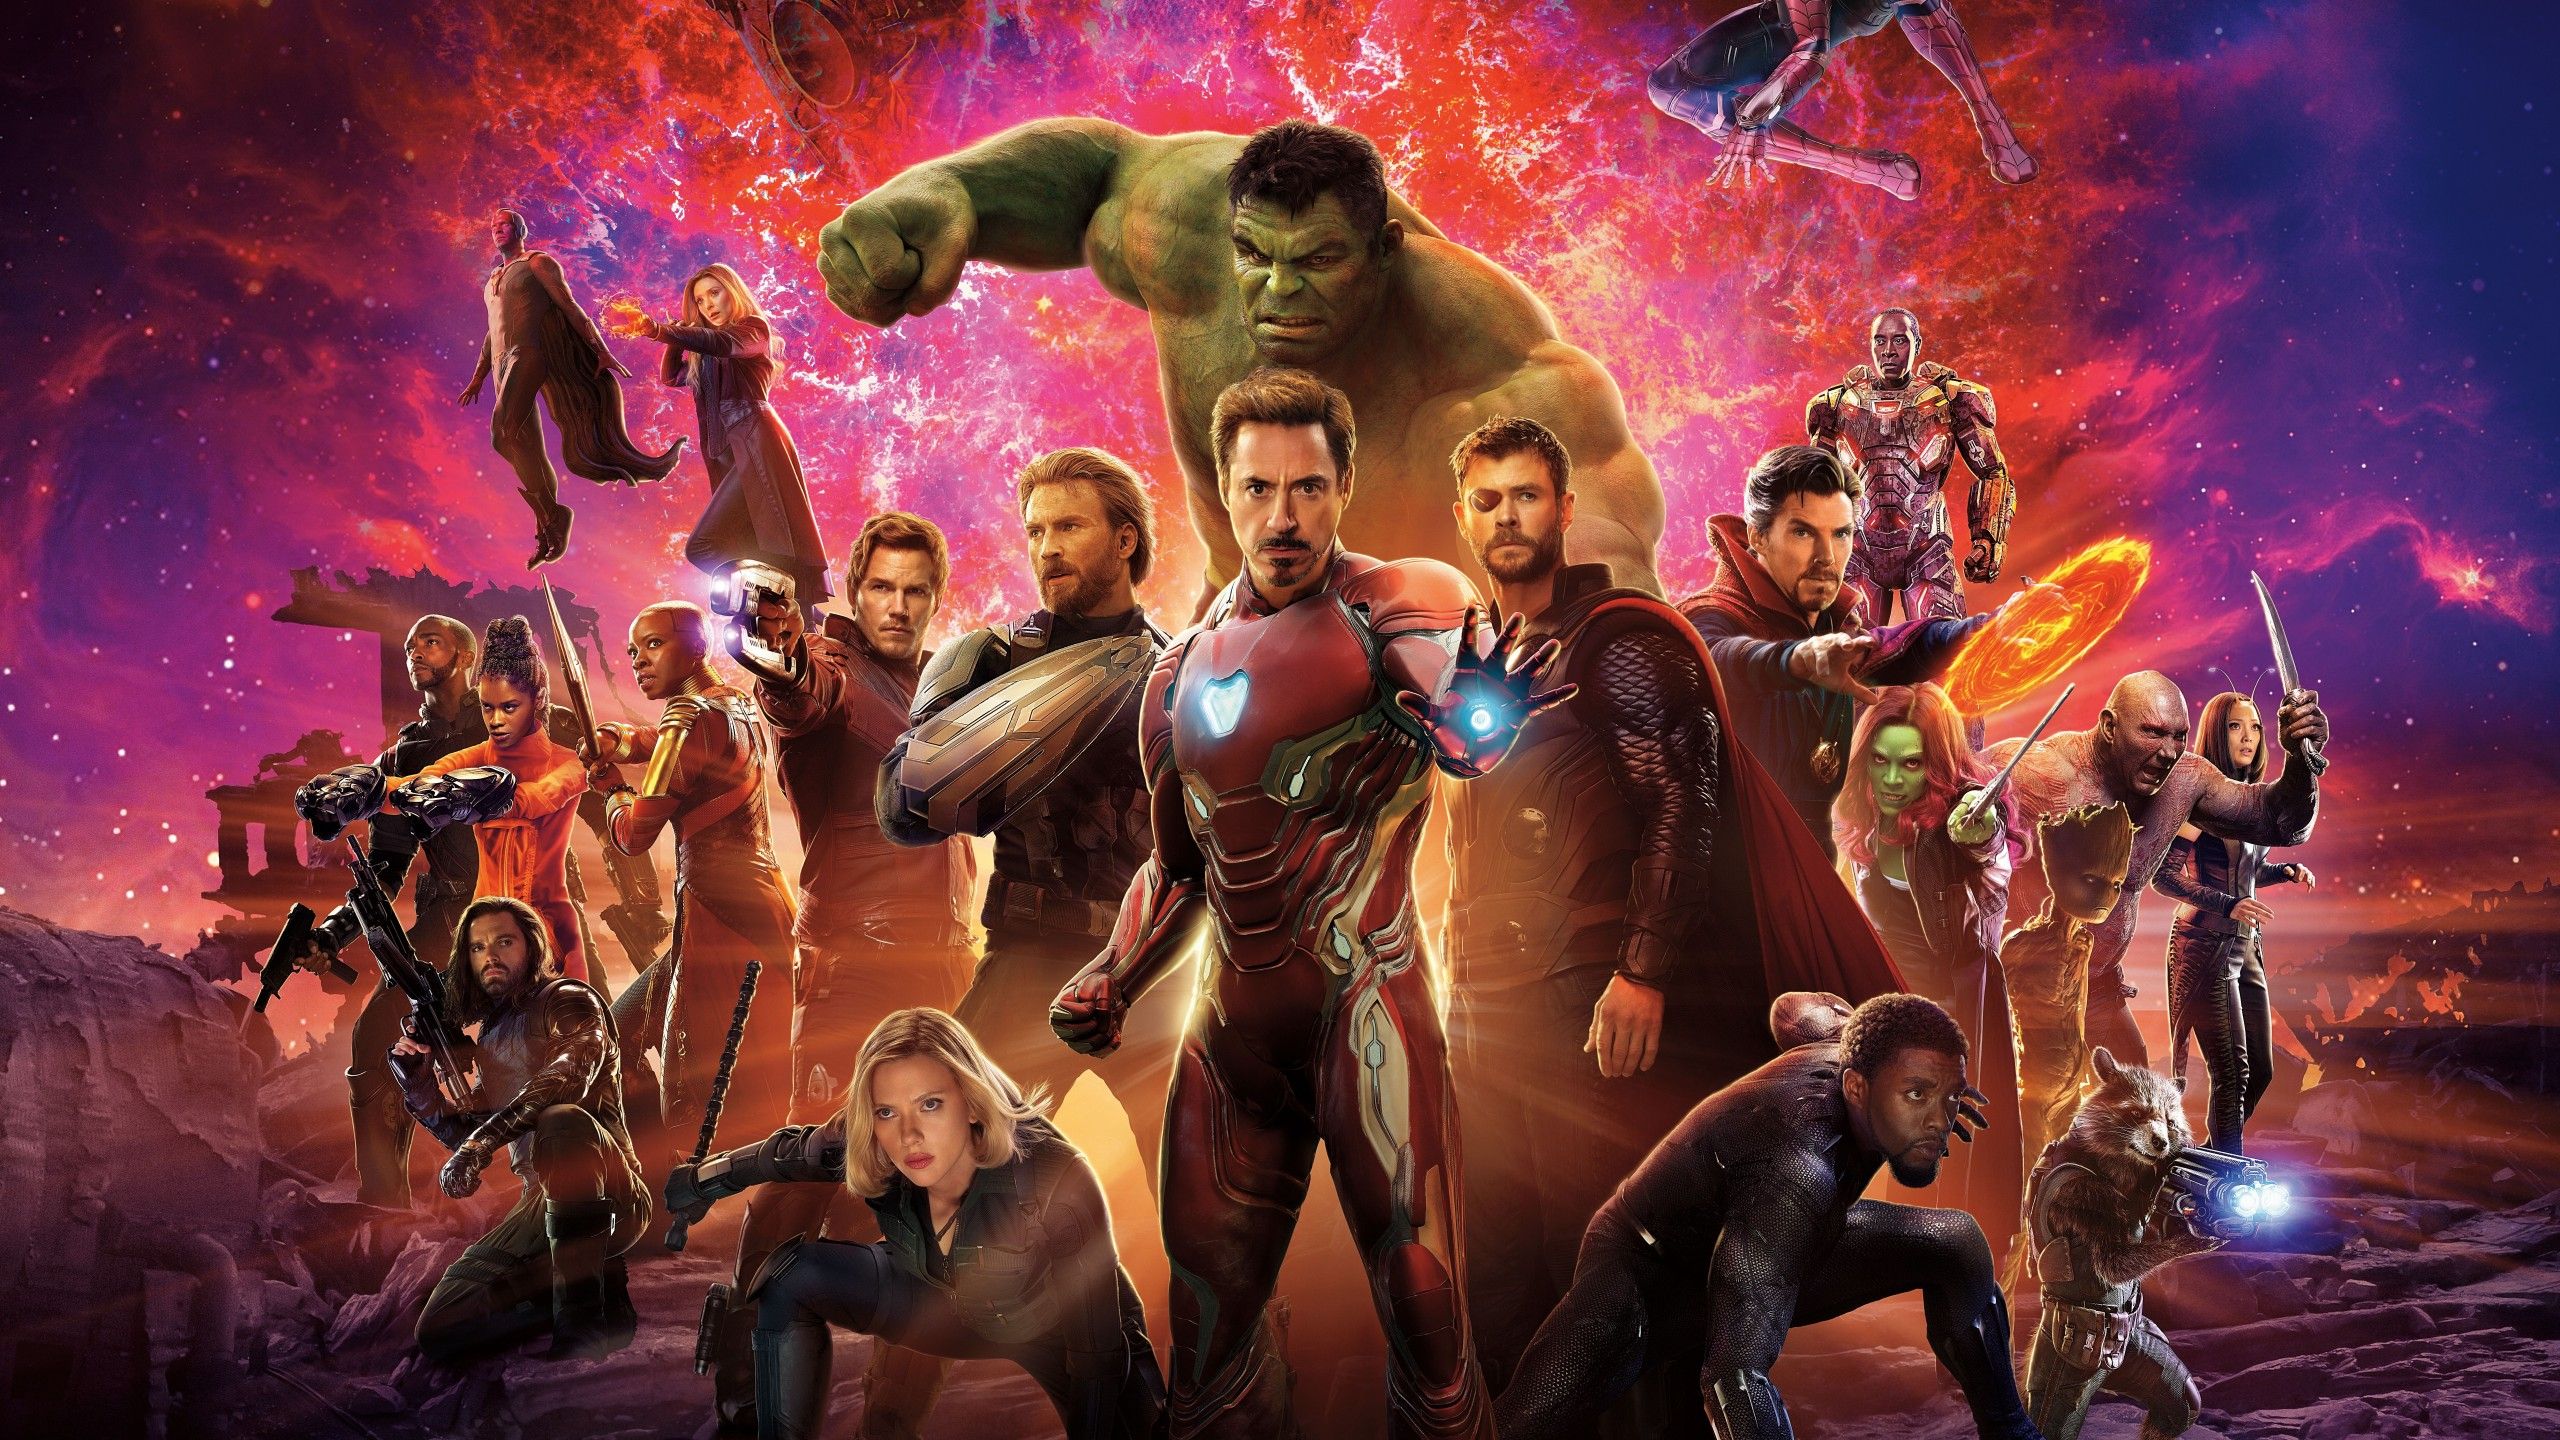 Download Avengers Infinity War 4K Desktop Background 918 2560x1440 px High Resolution Wallpaper